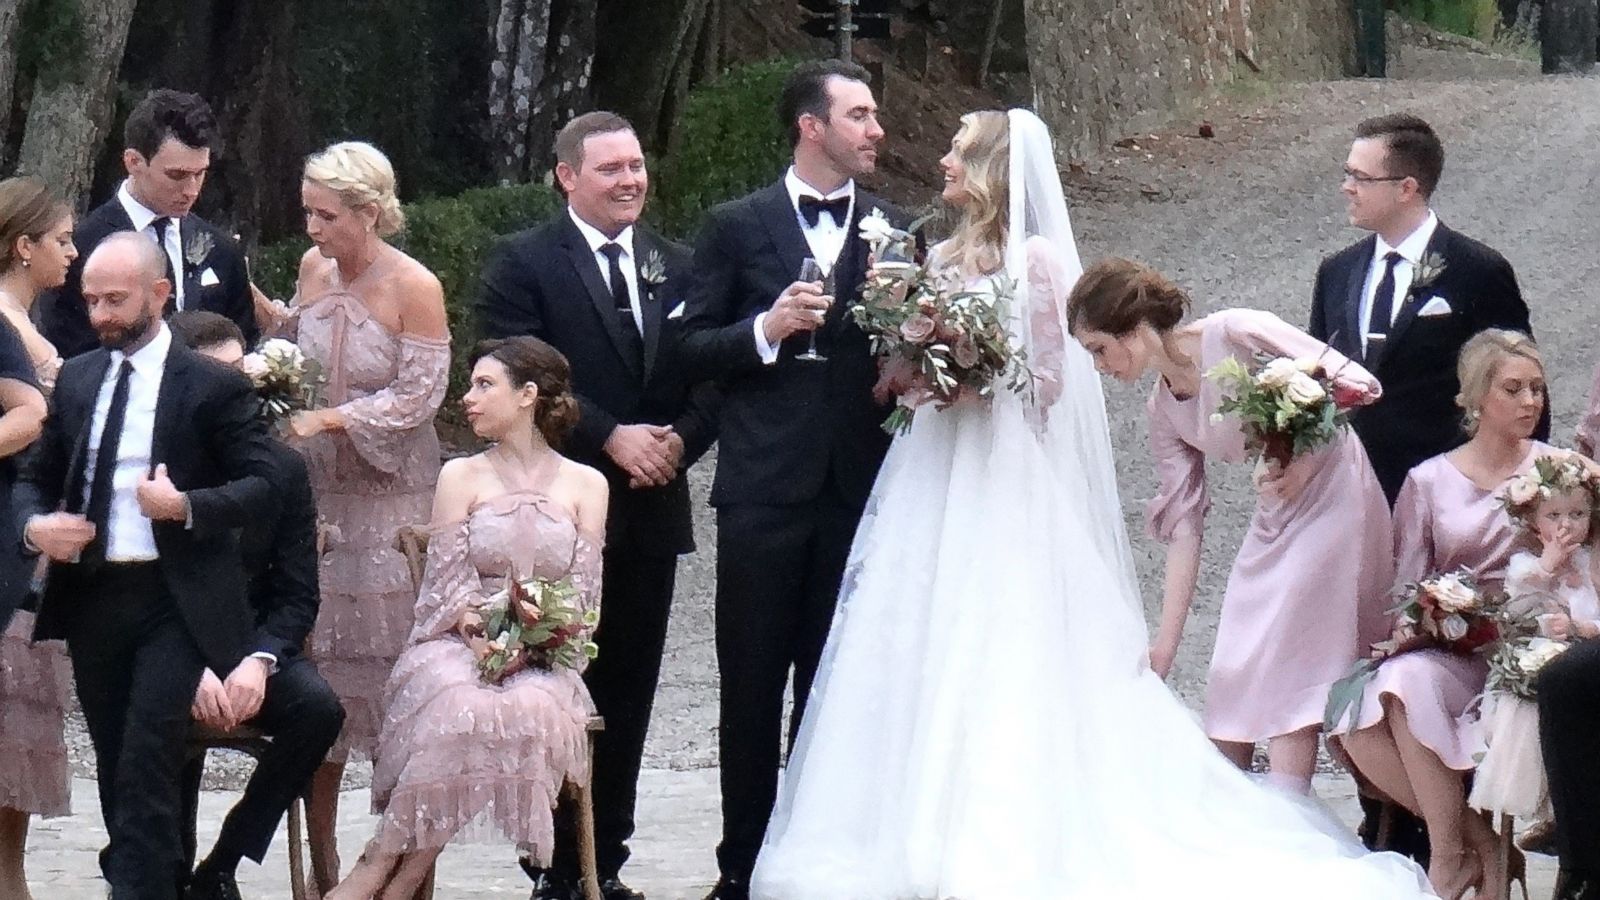 Kate Upton and Justin Verlander share 1st wedding portrait - ABC News